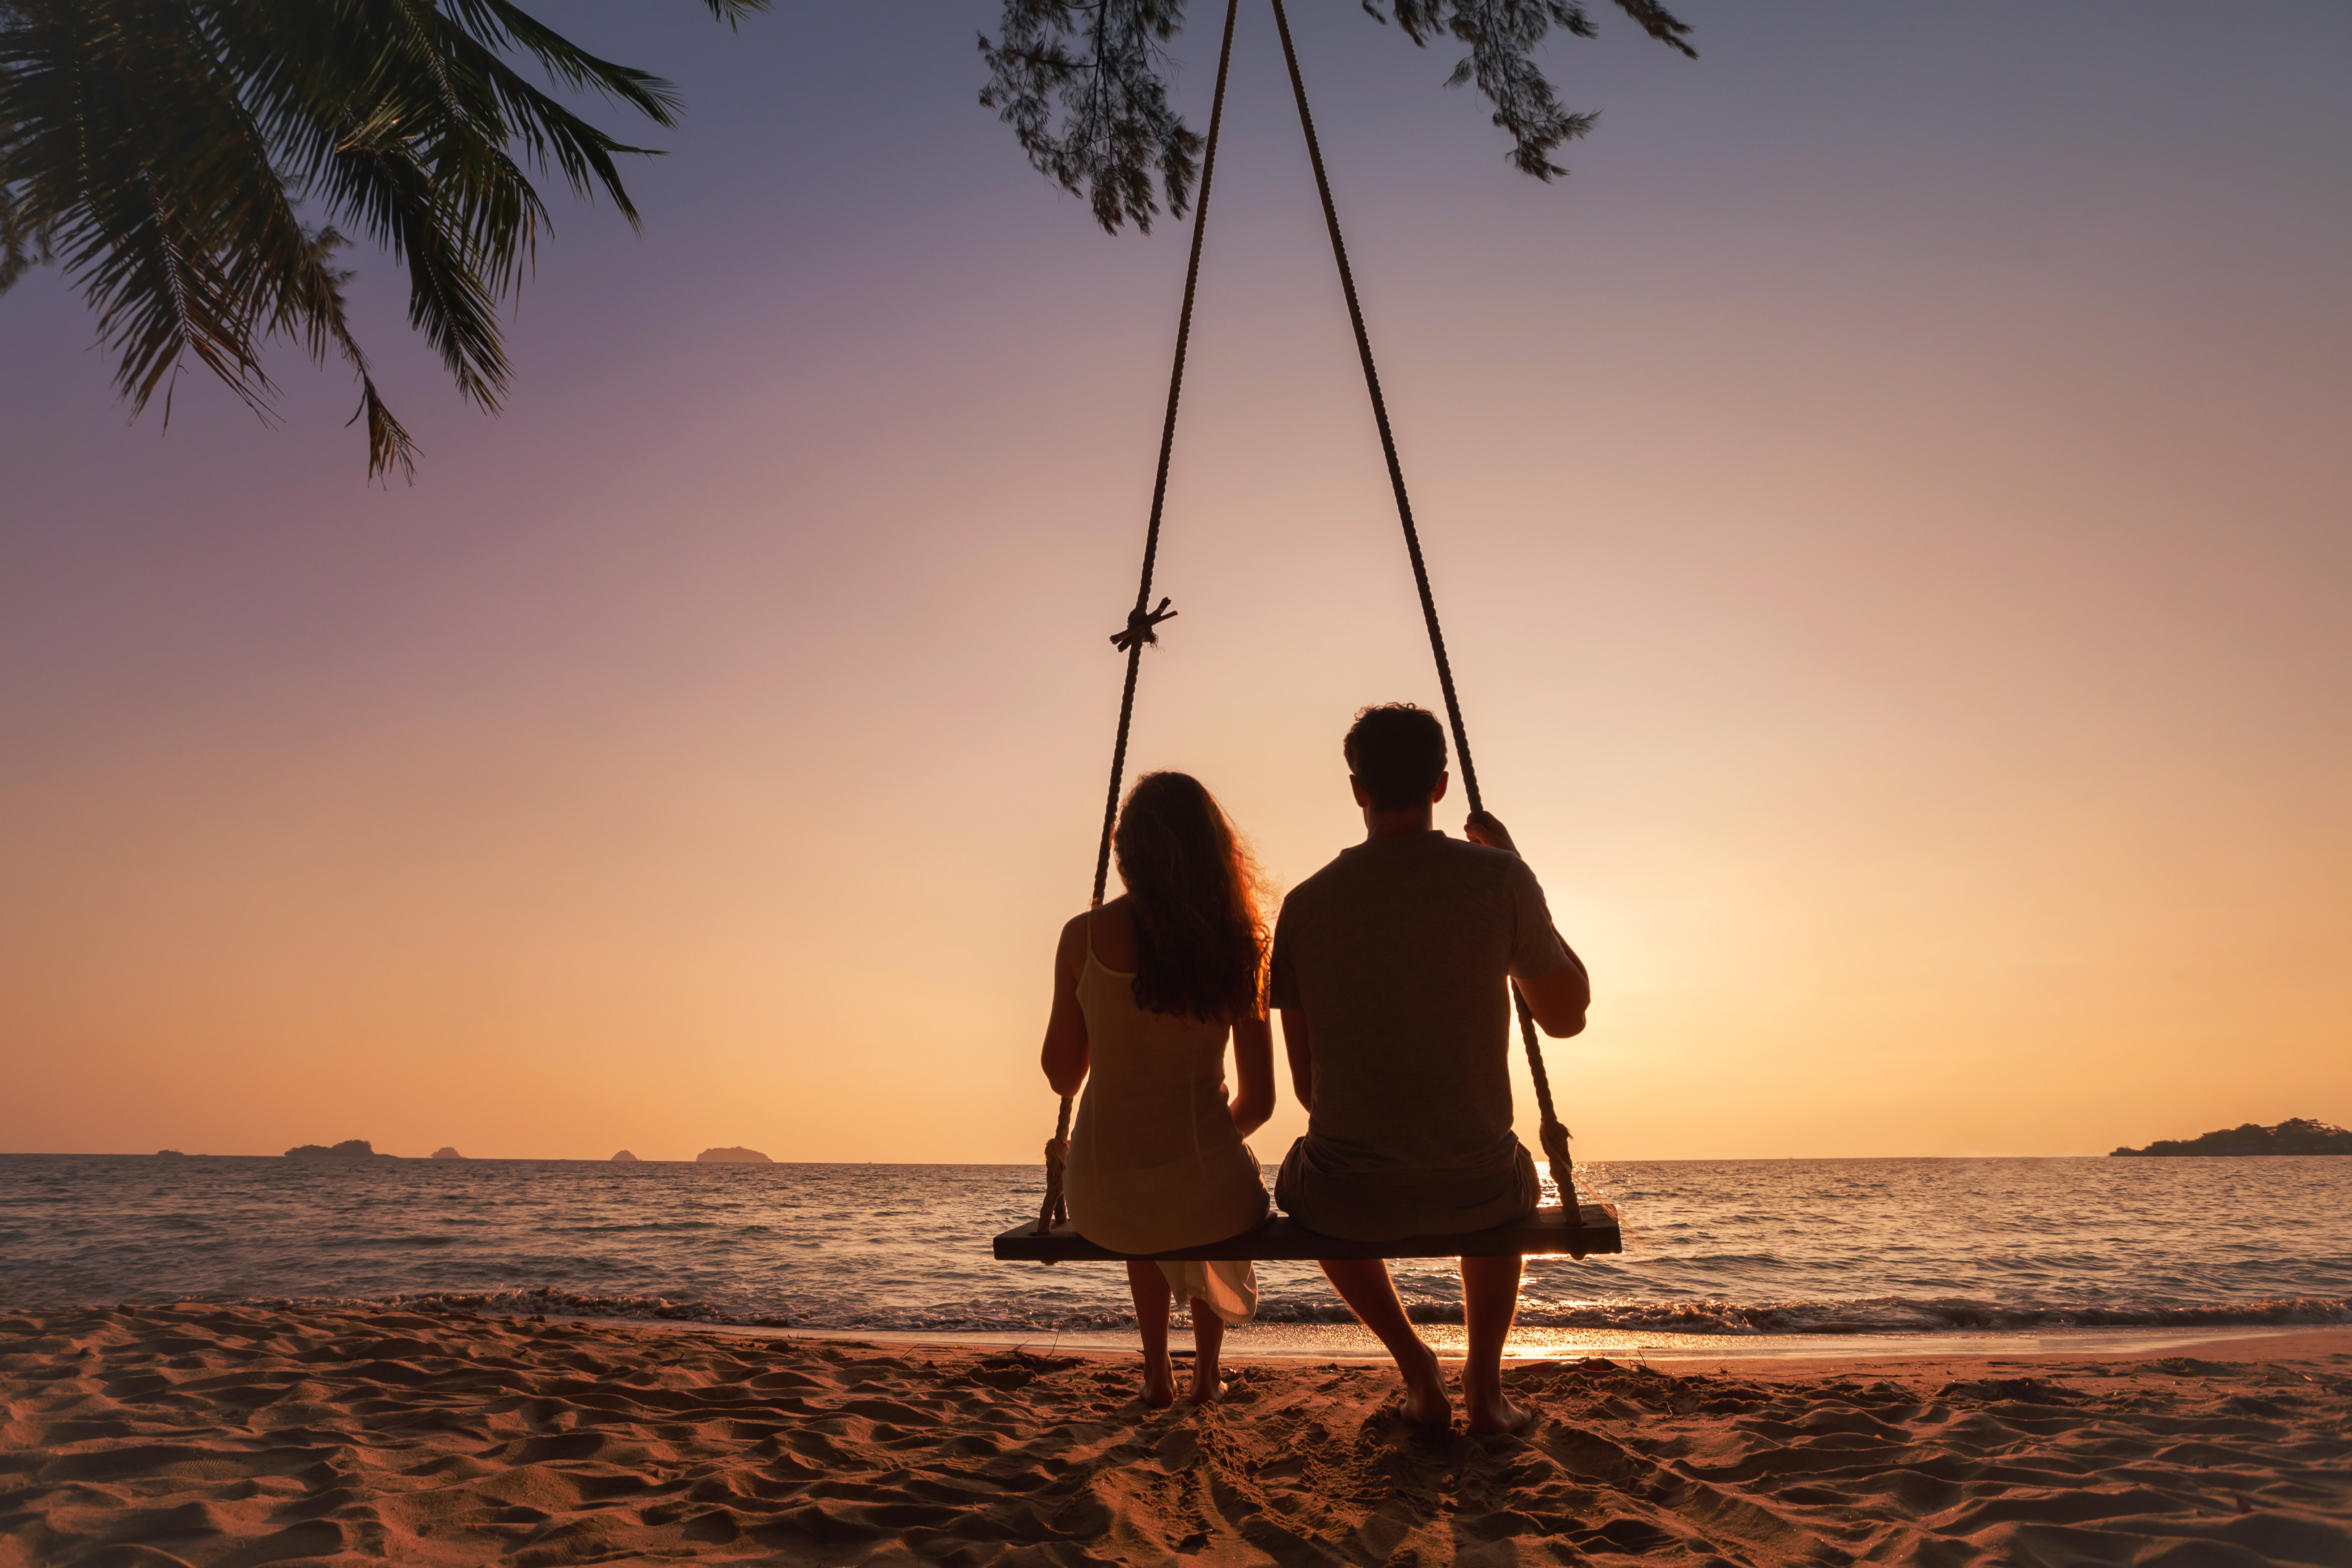 A couple enjoying sunset at the beach | Source: Shutterstock